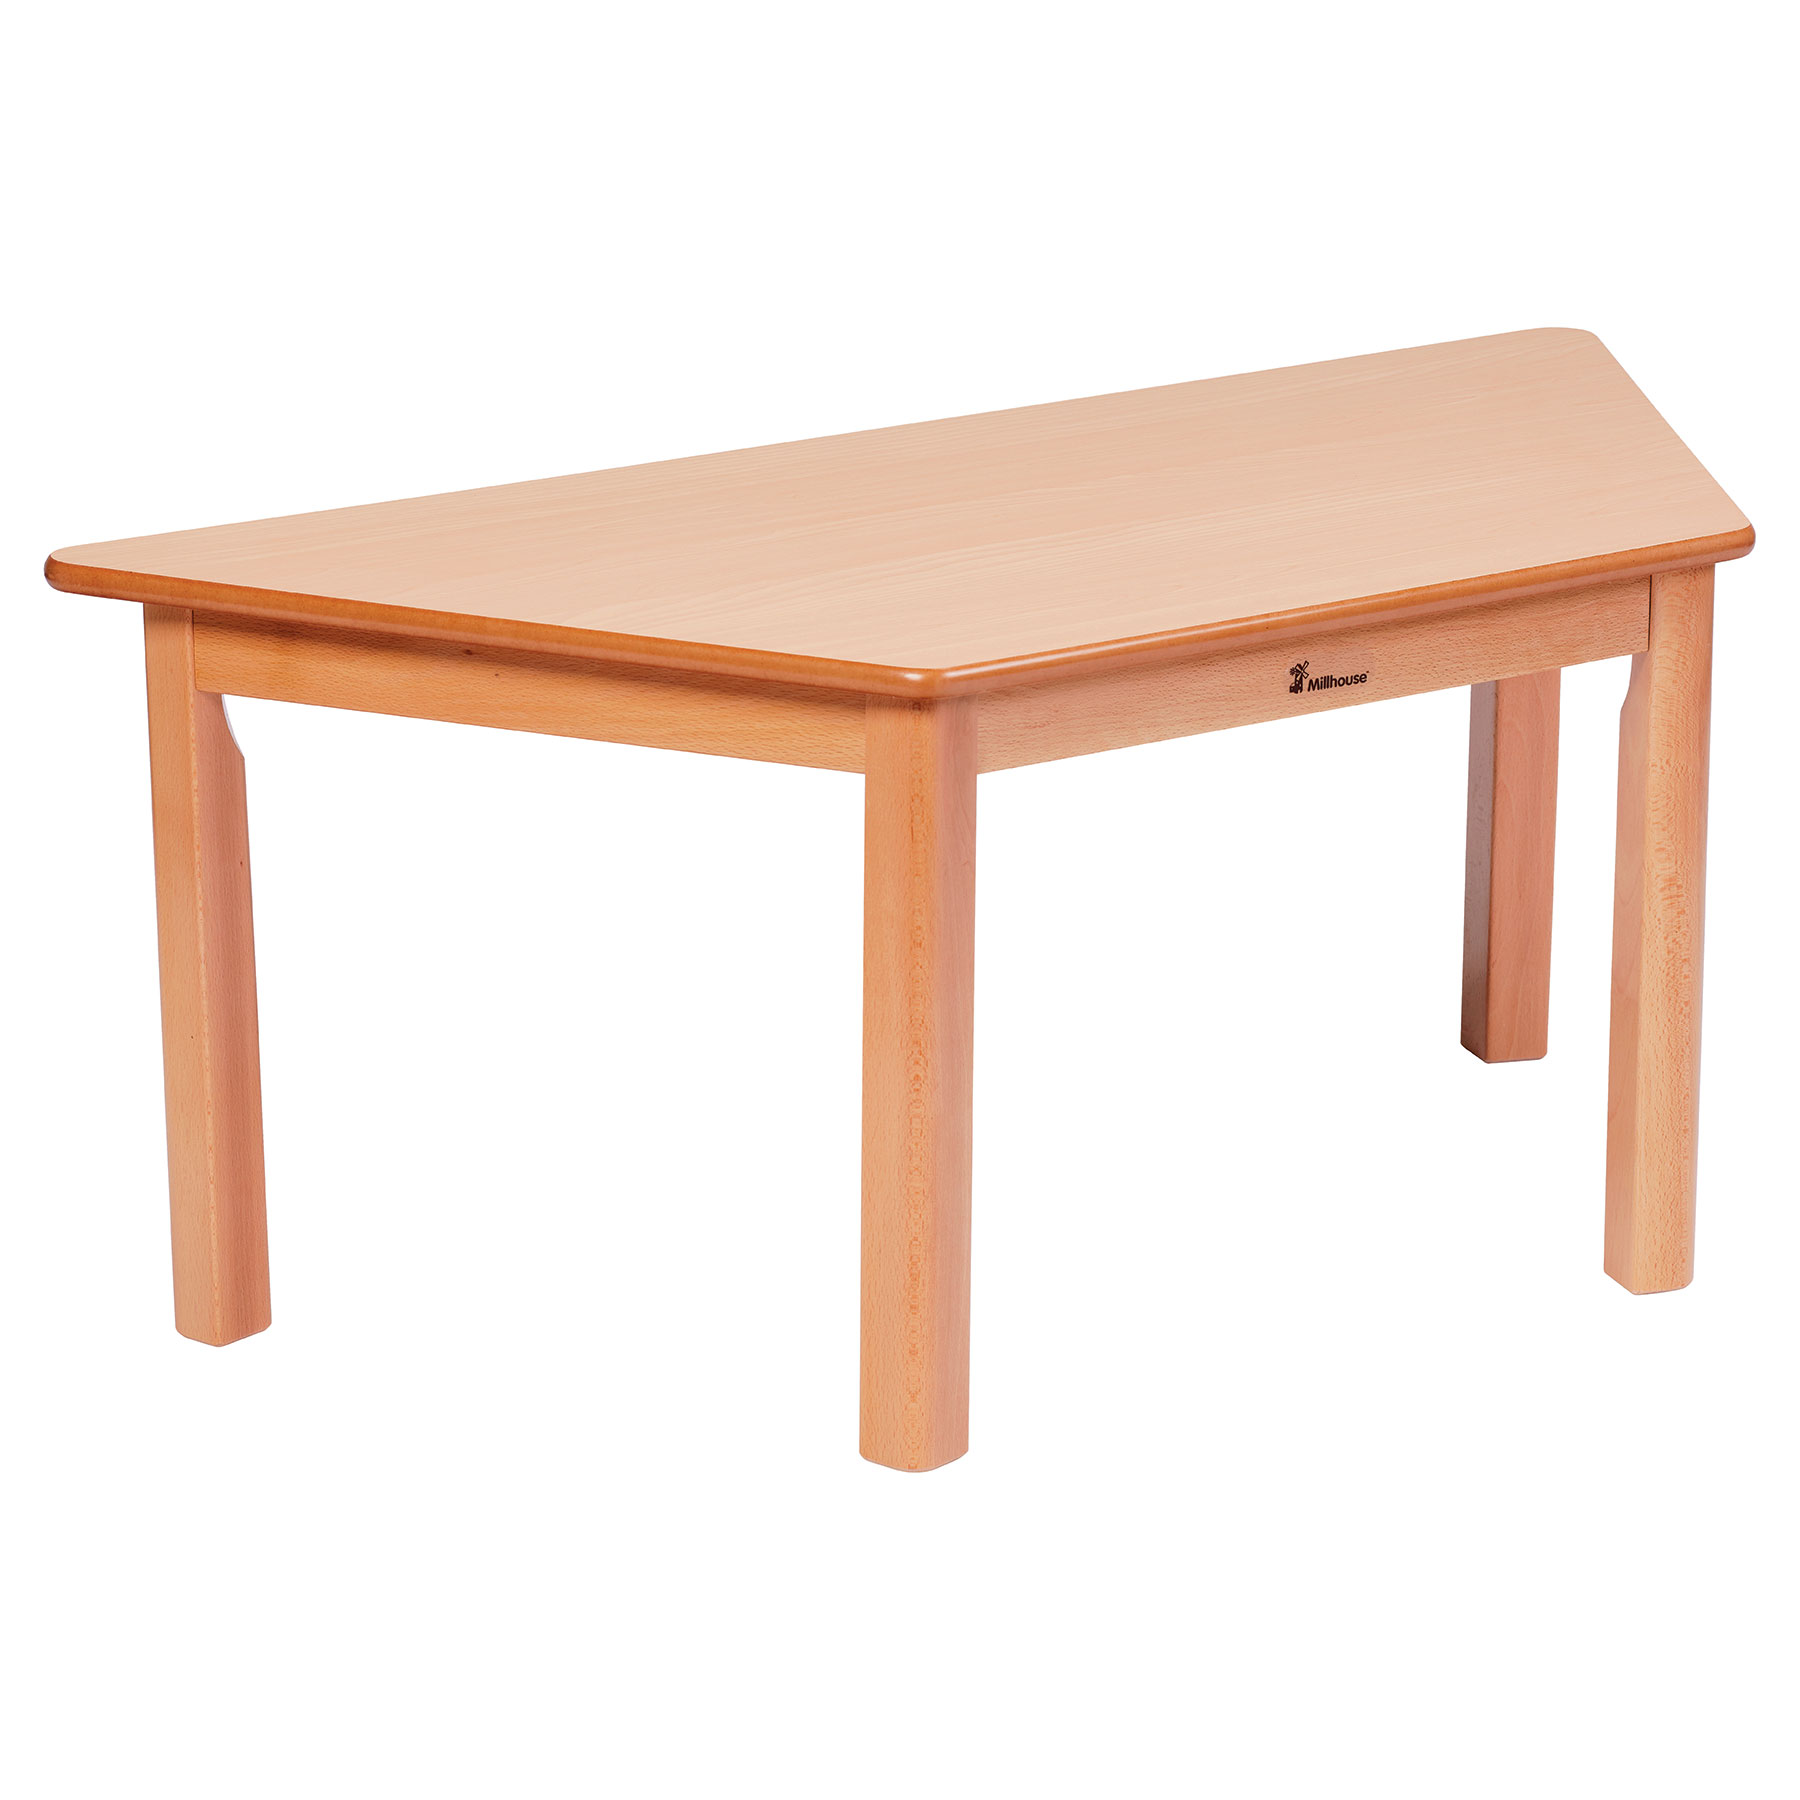 Beech Wood Trapezoidal Classroom Table